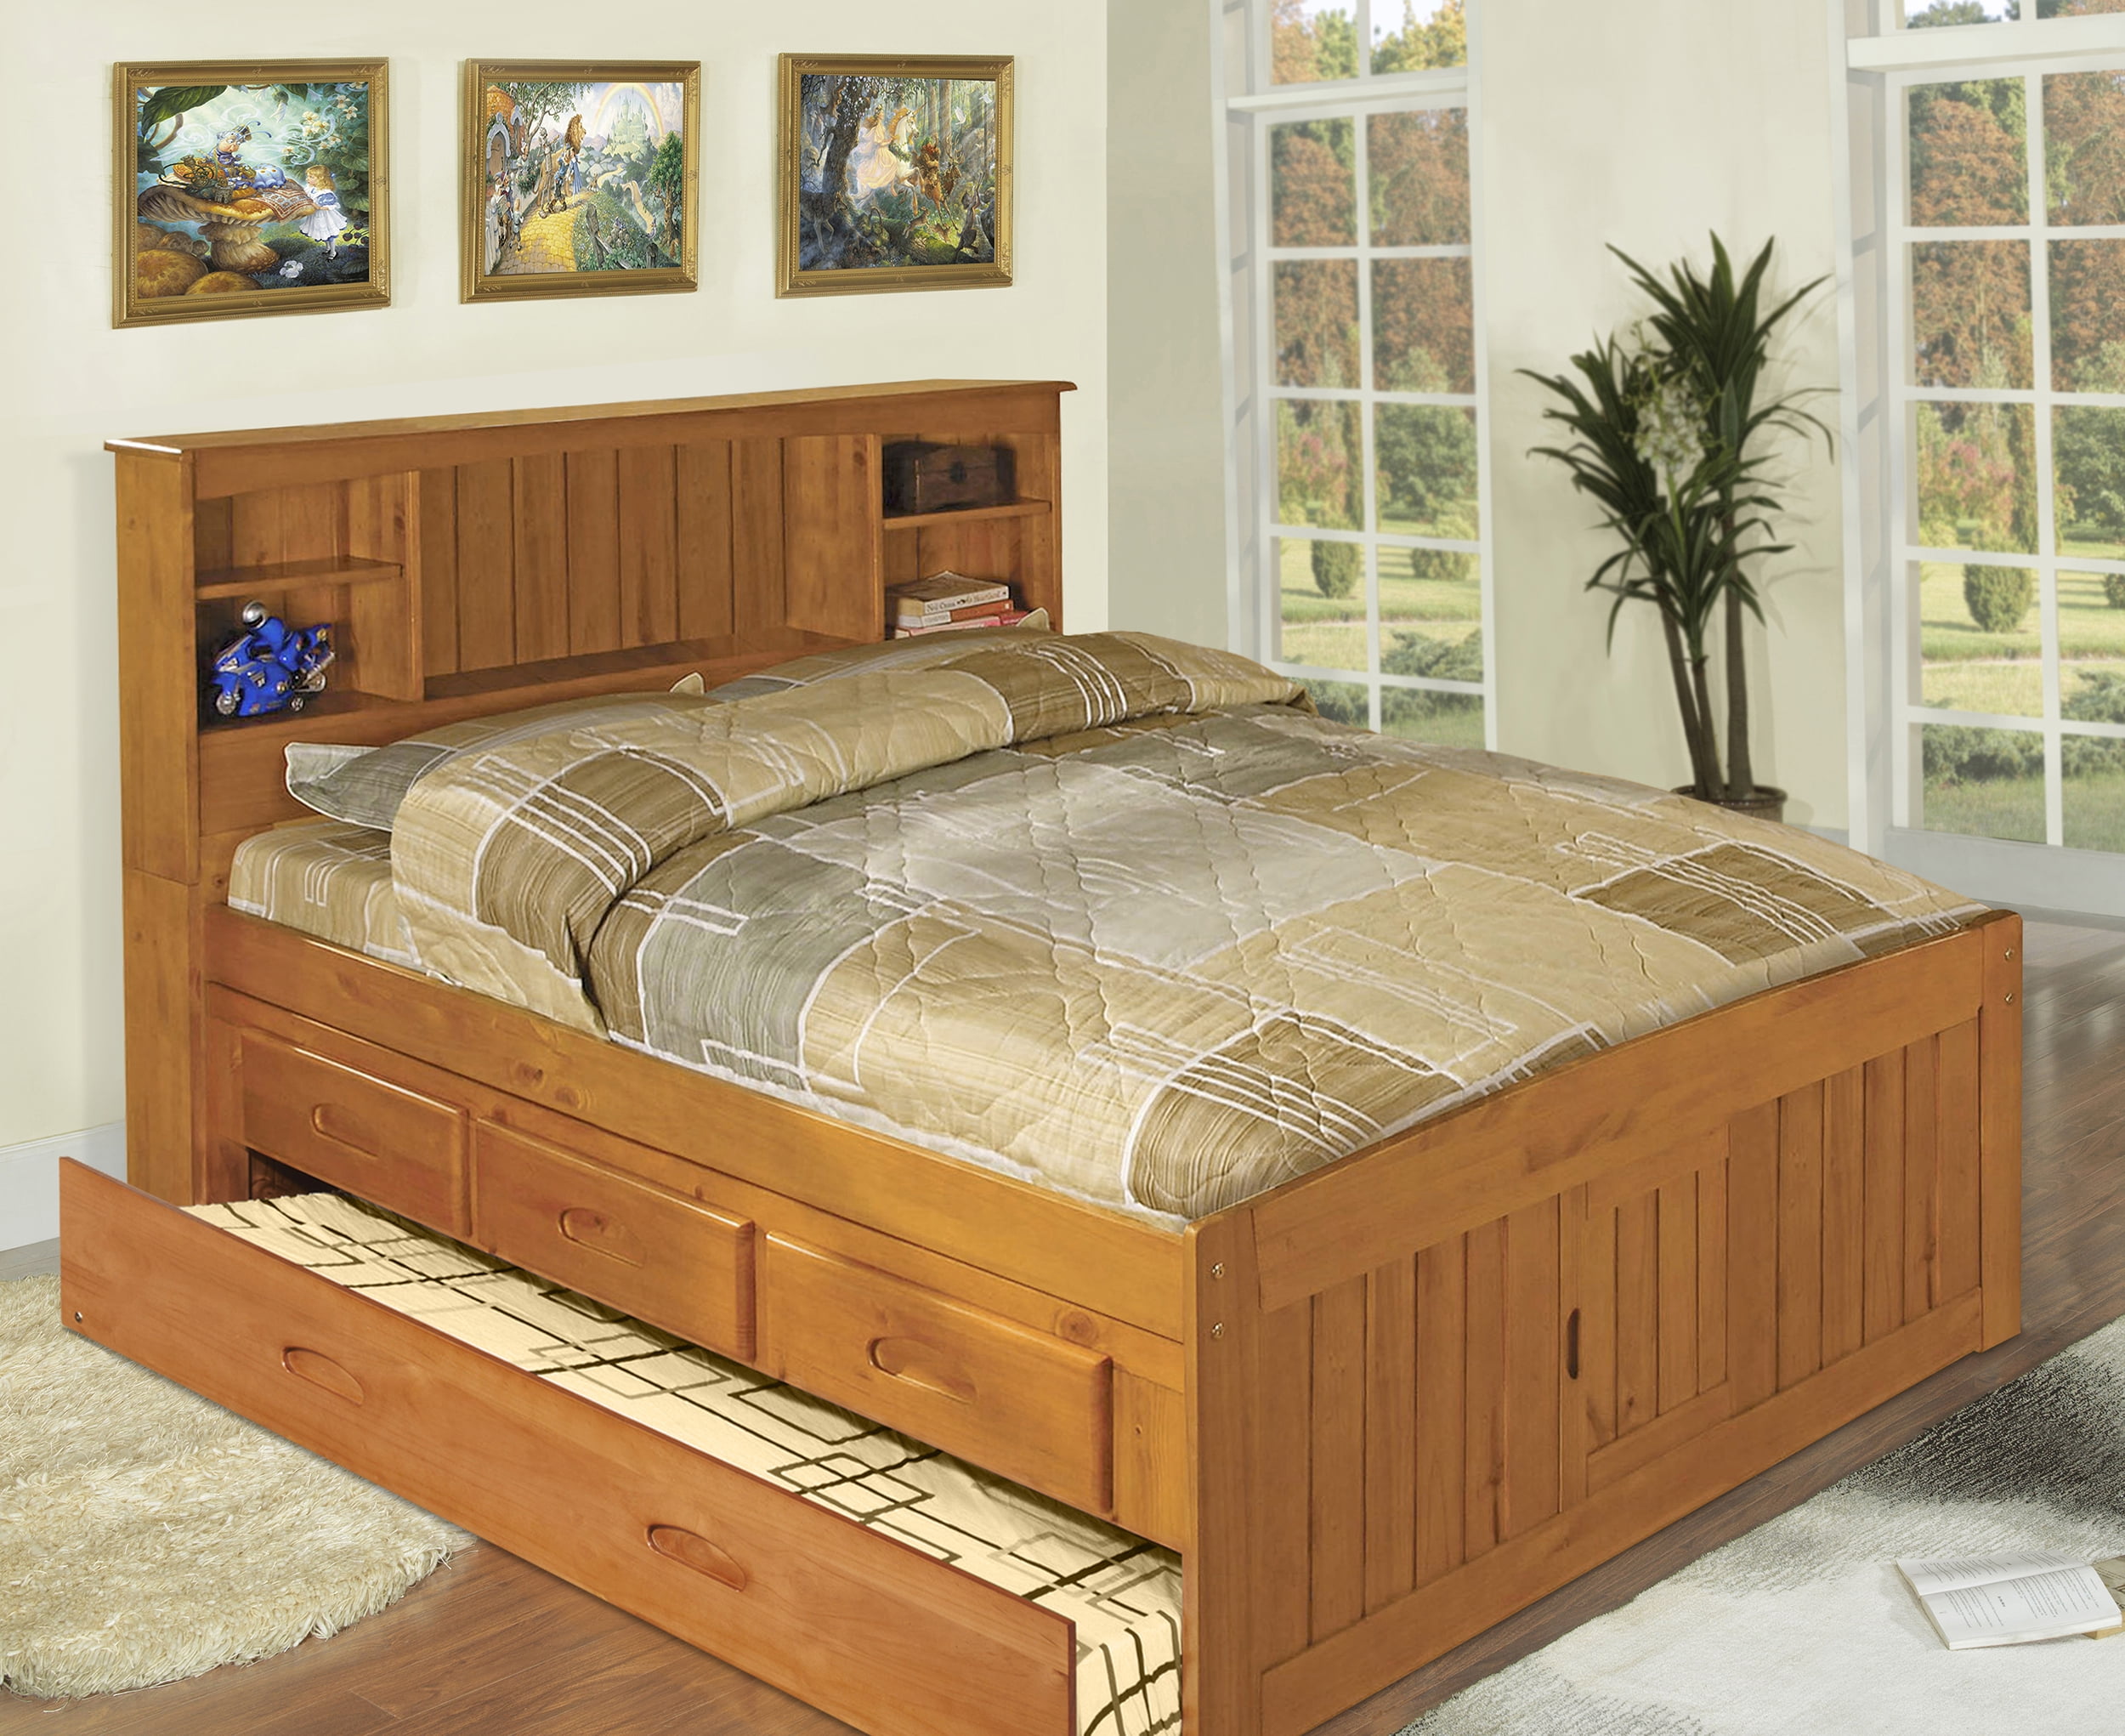 canadian pine bedroom furniture